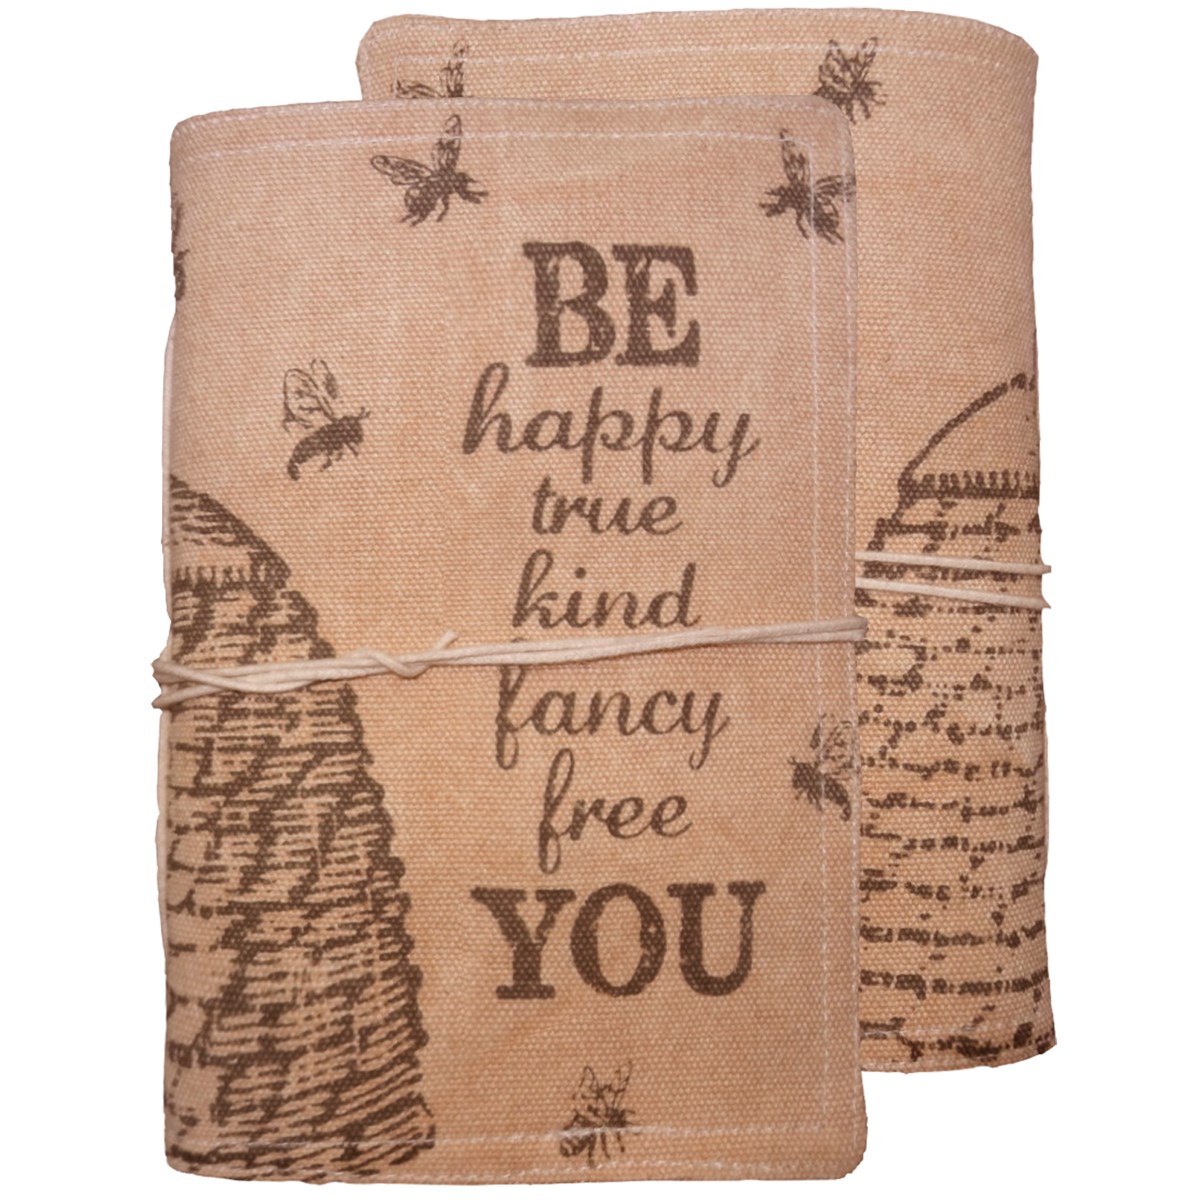 Be Happy True Kind Fancy Free You Journal - Canvas, Paper